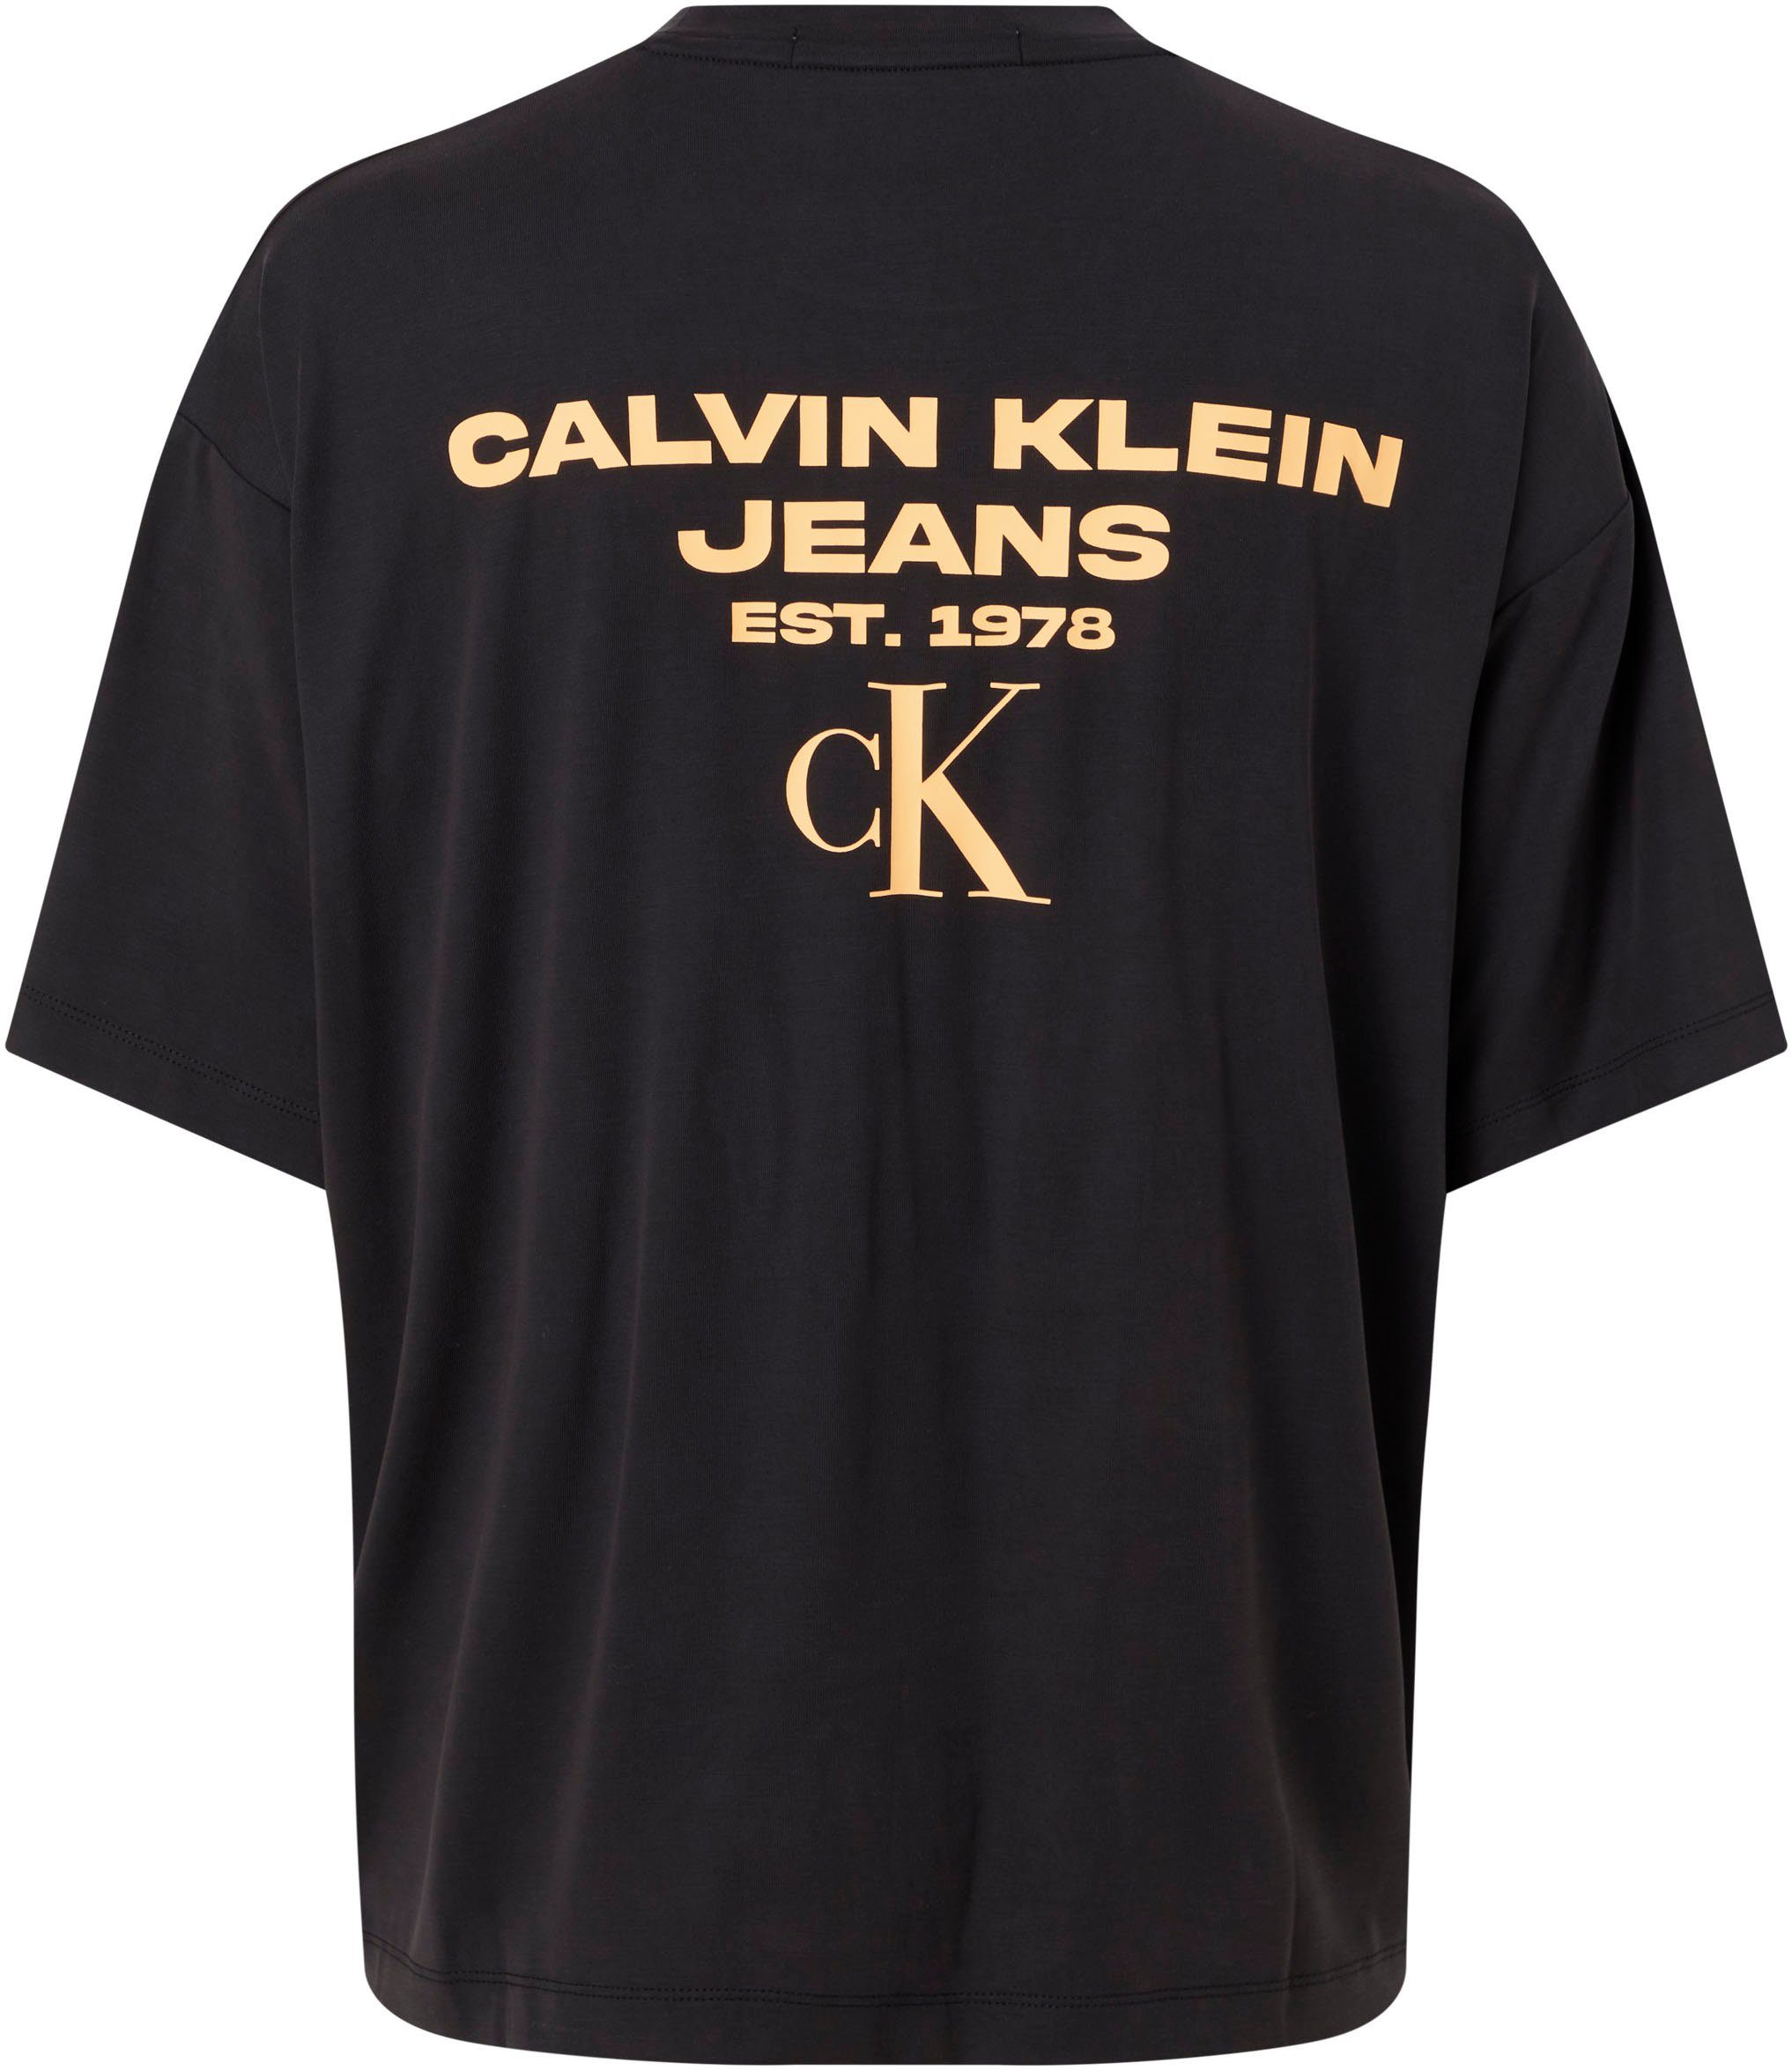 LOGO BOYFRIEND Calvin TEE T-Shirt Klein MODAL BACK Jeans